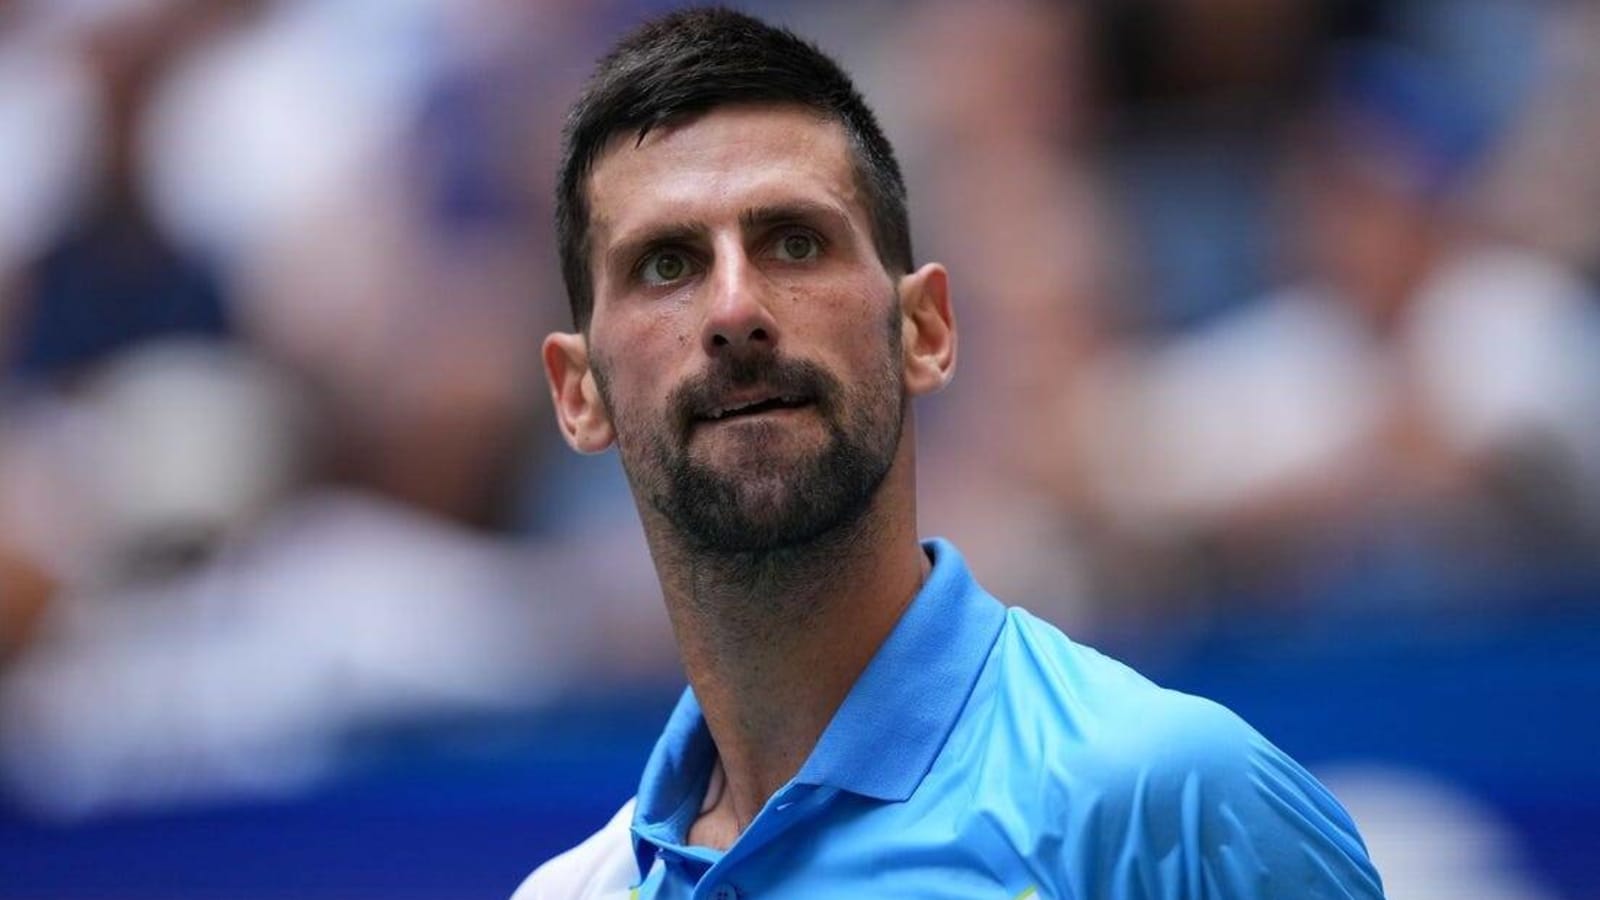 U.S. Open semis: Djokovic, Alcaraz on another collision course?